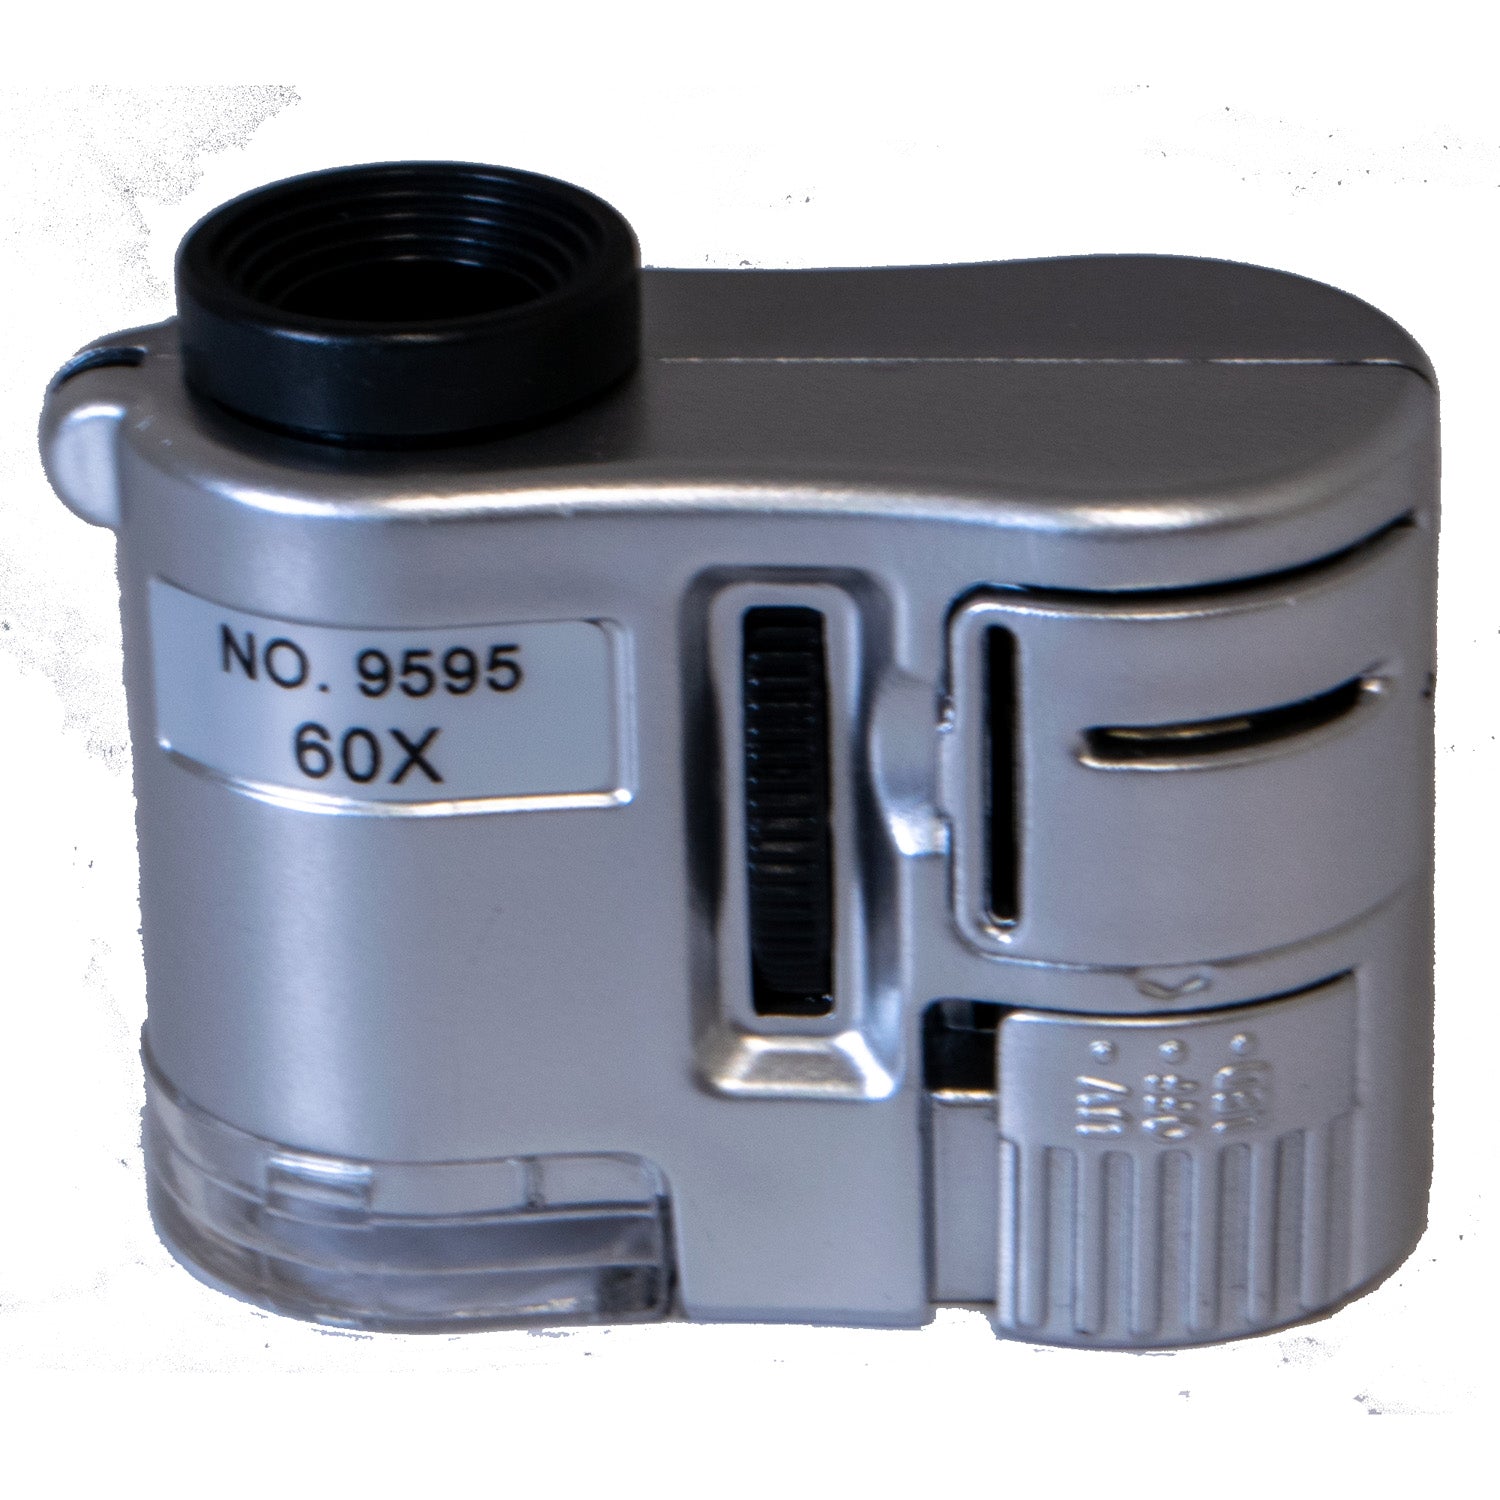 Pocket microscope, 60X